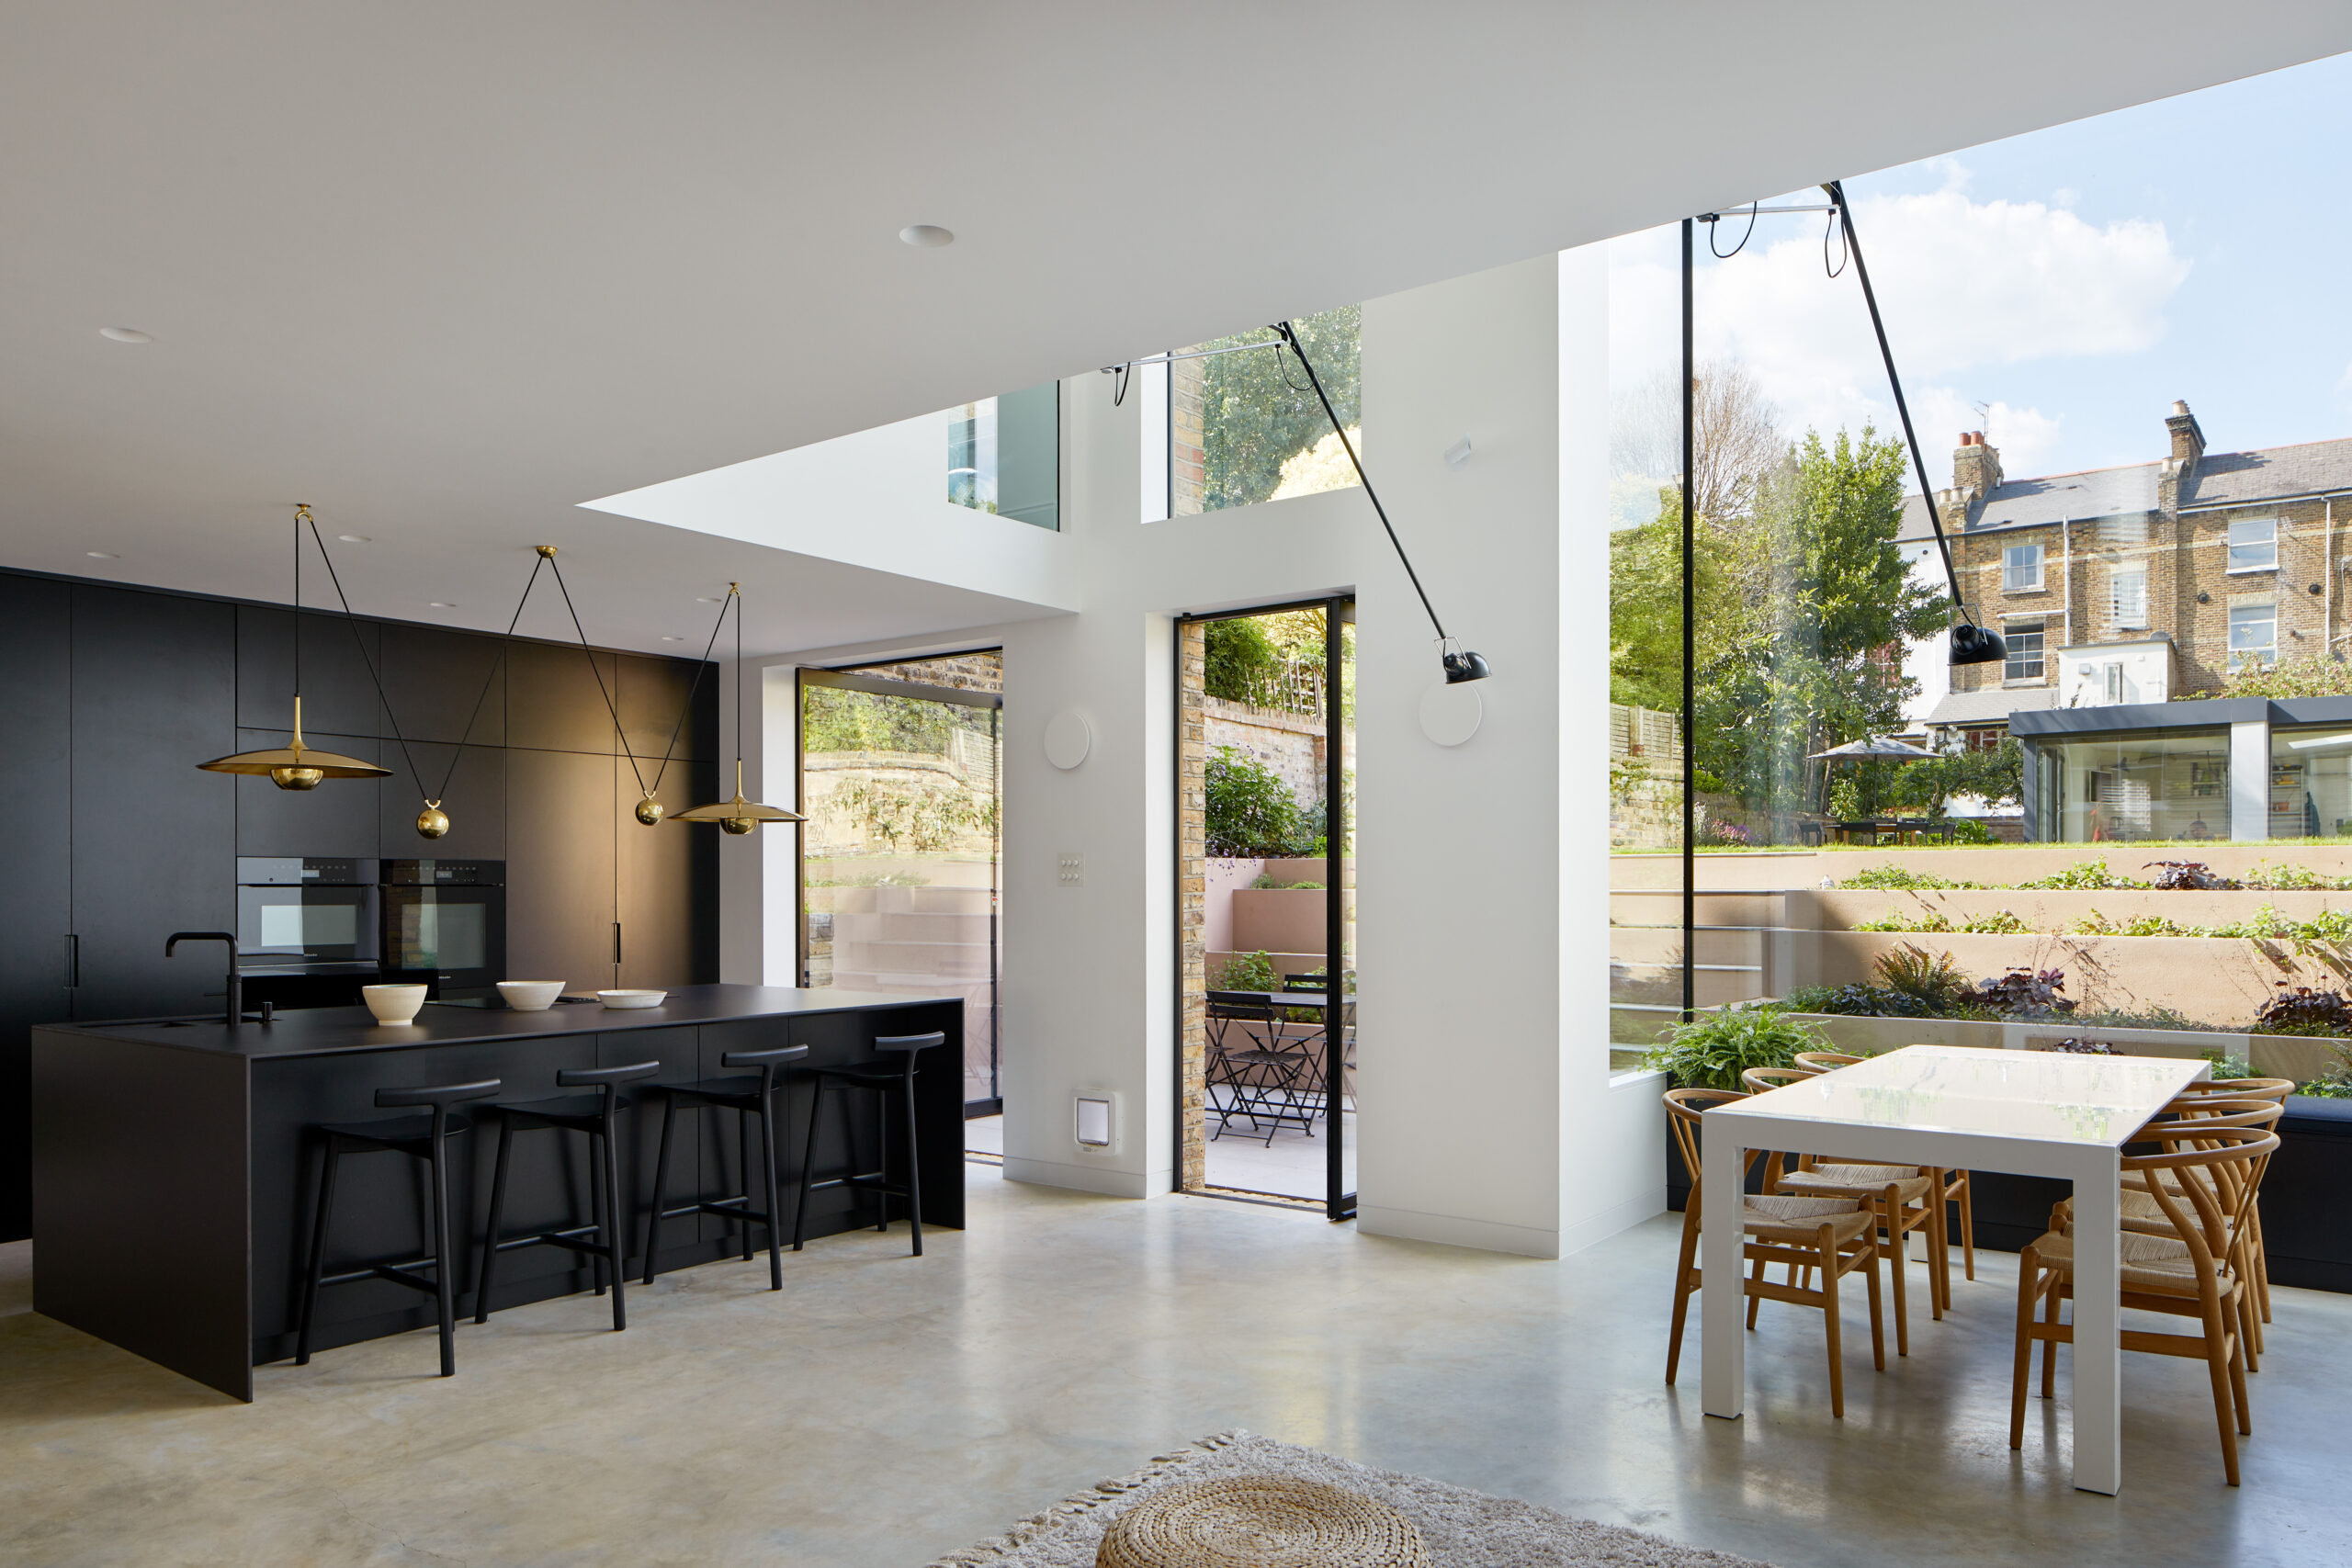 Kitchen by Paul Archer Design - luxury architecture studio in London